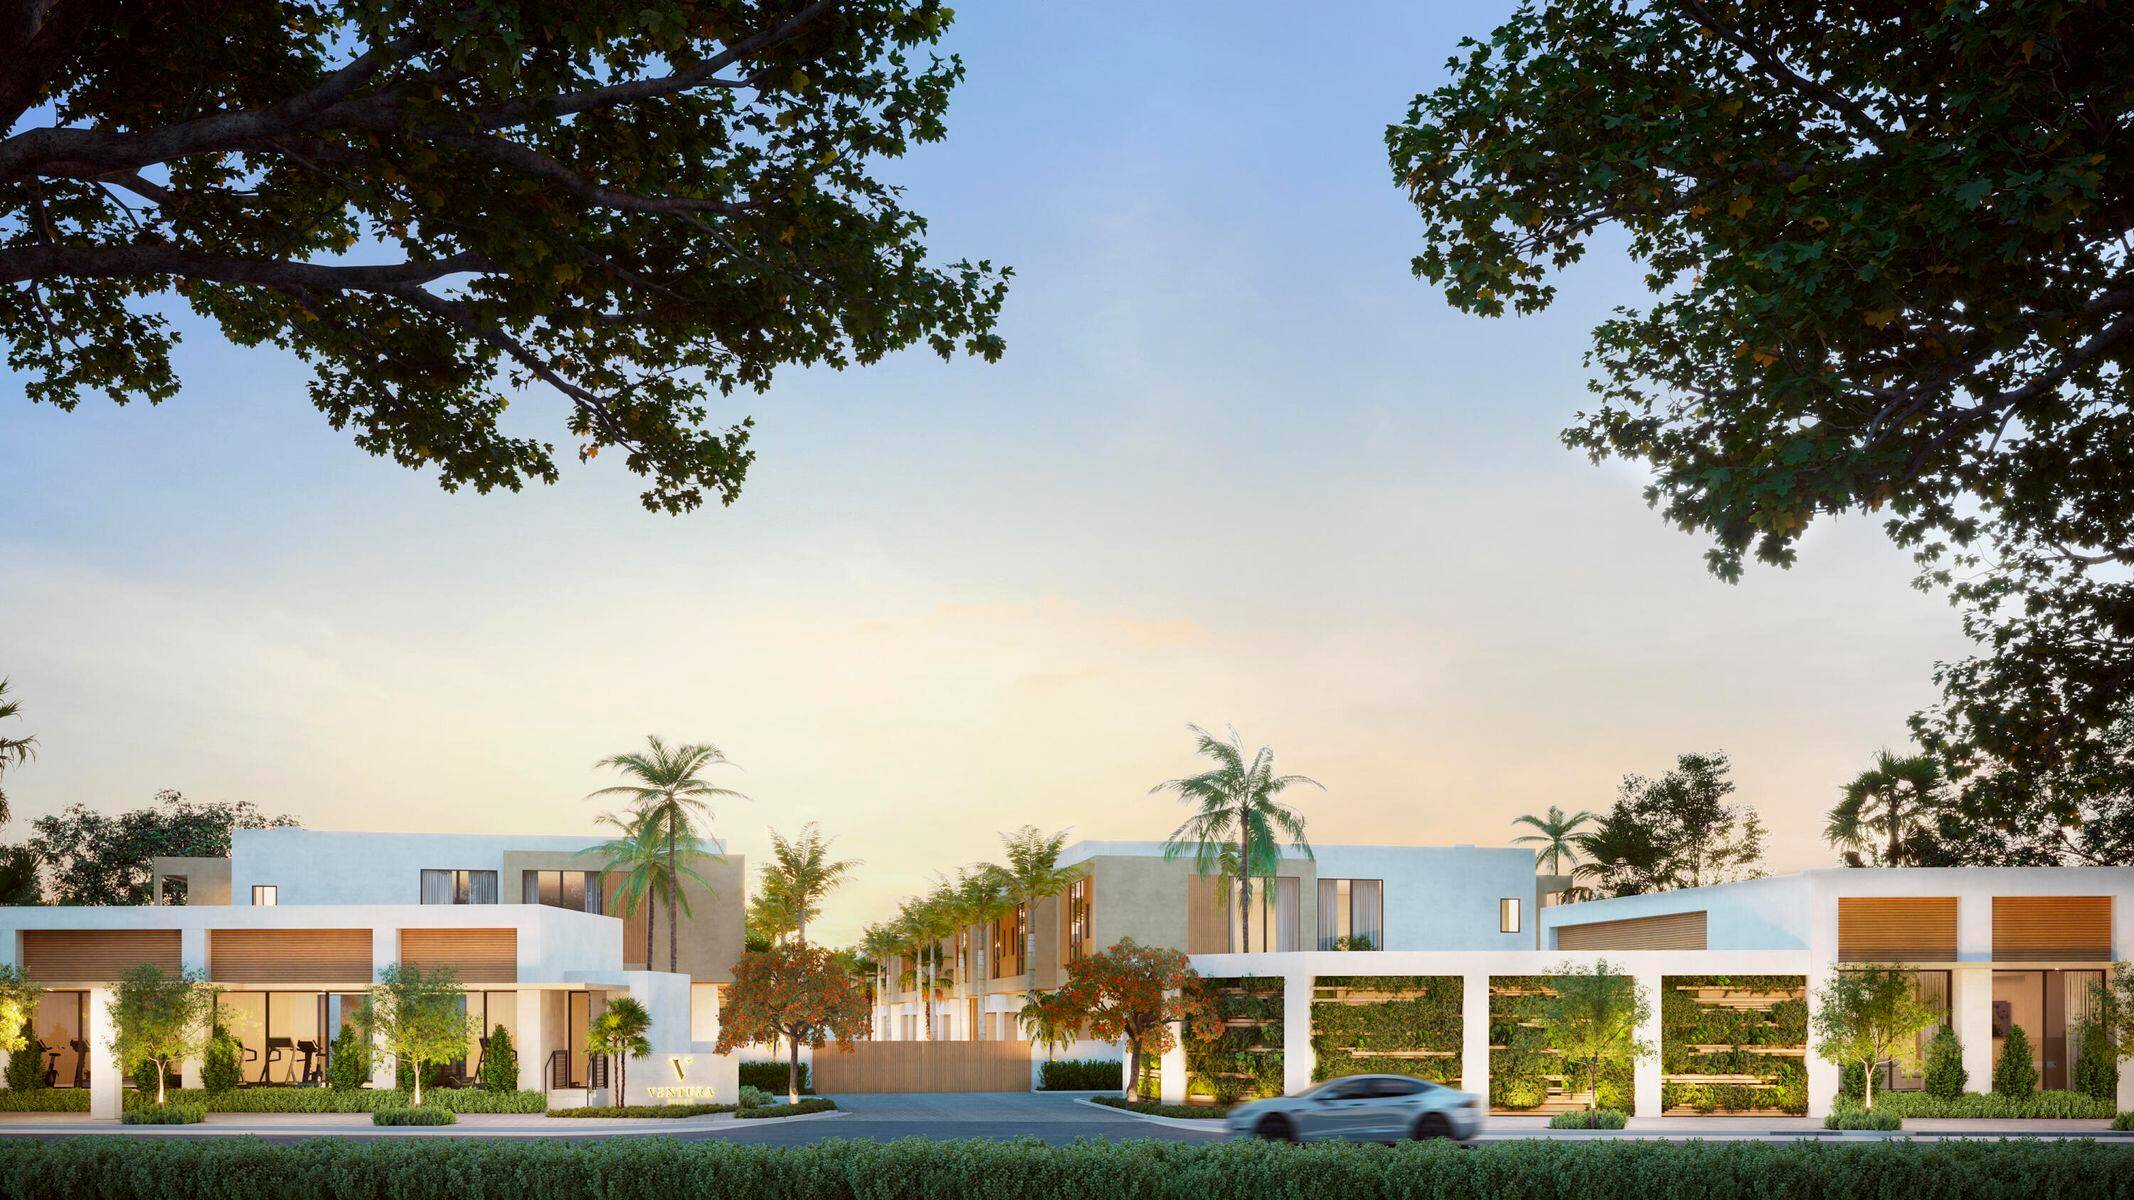 Introducing Ventura Villas, a distinctive enclave where coastal charm meets everyday ease.